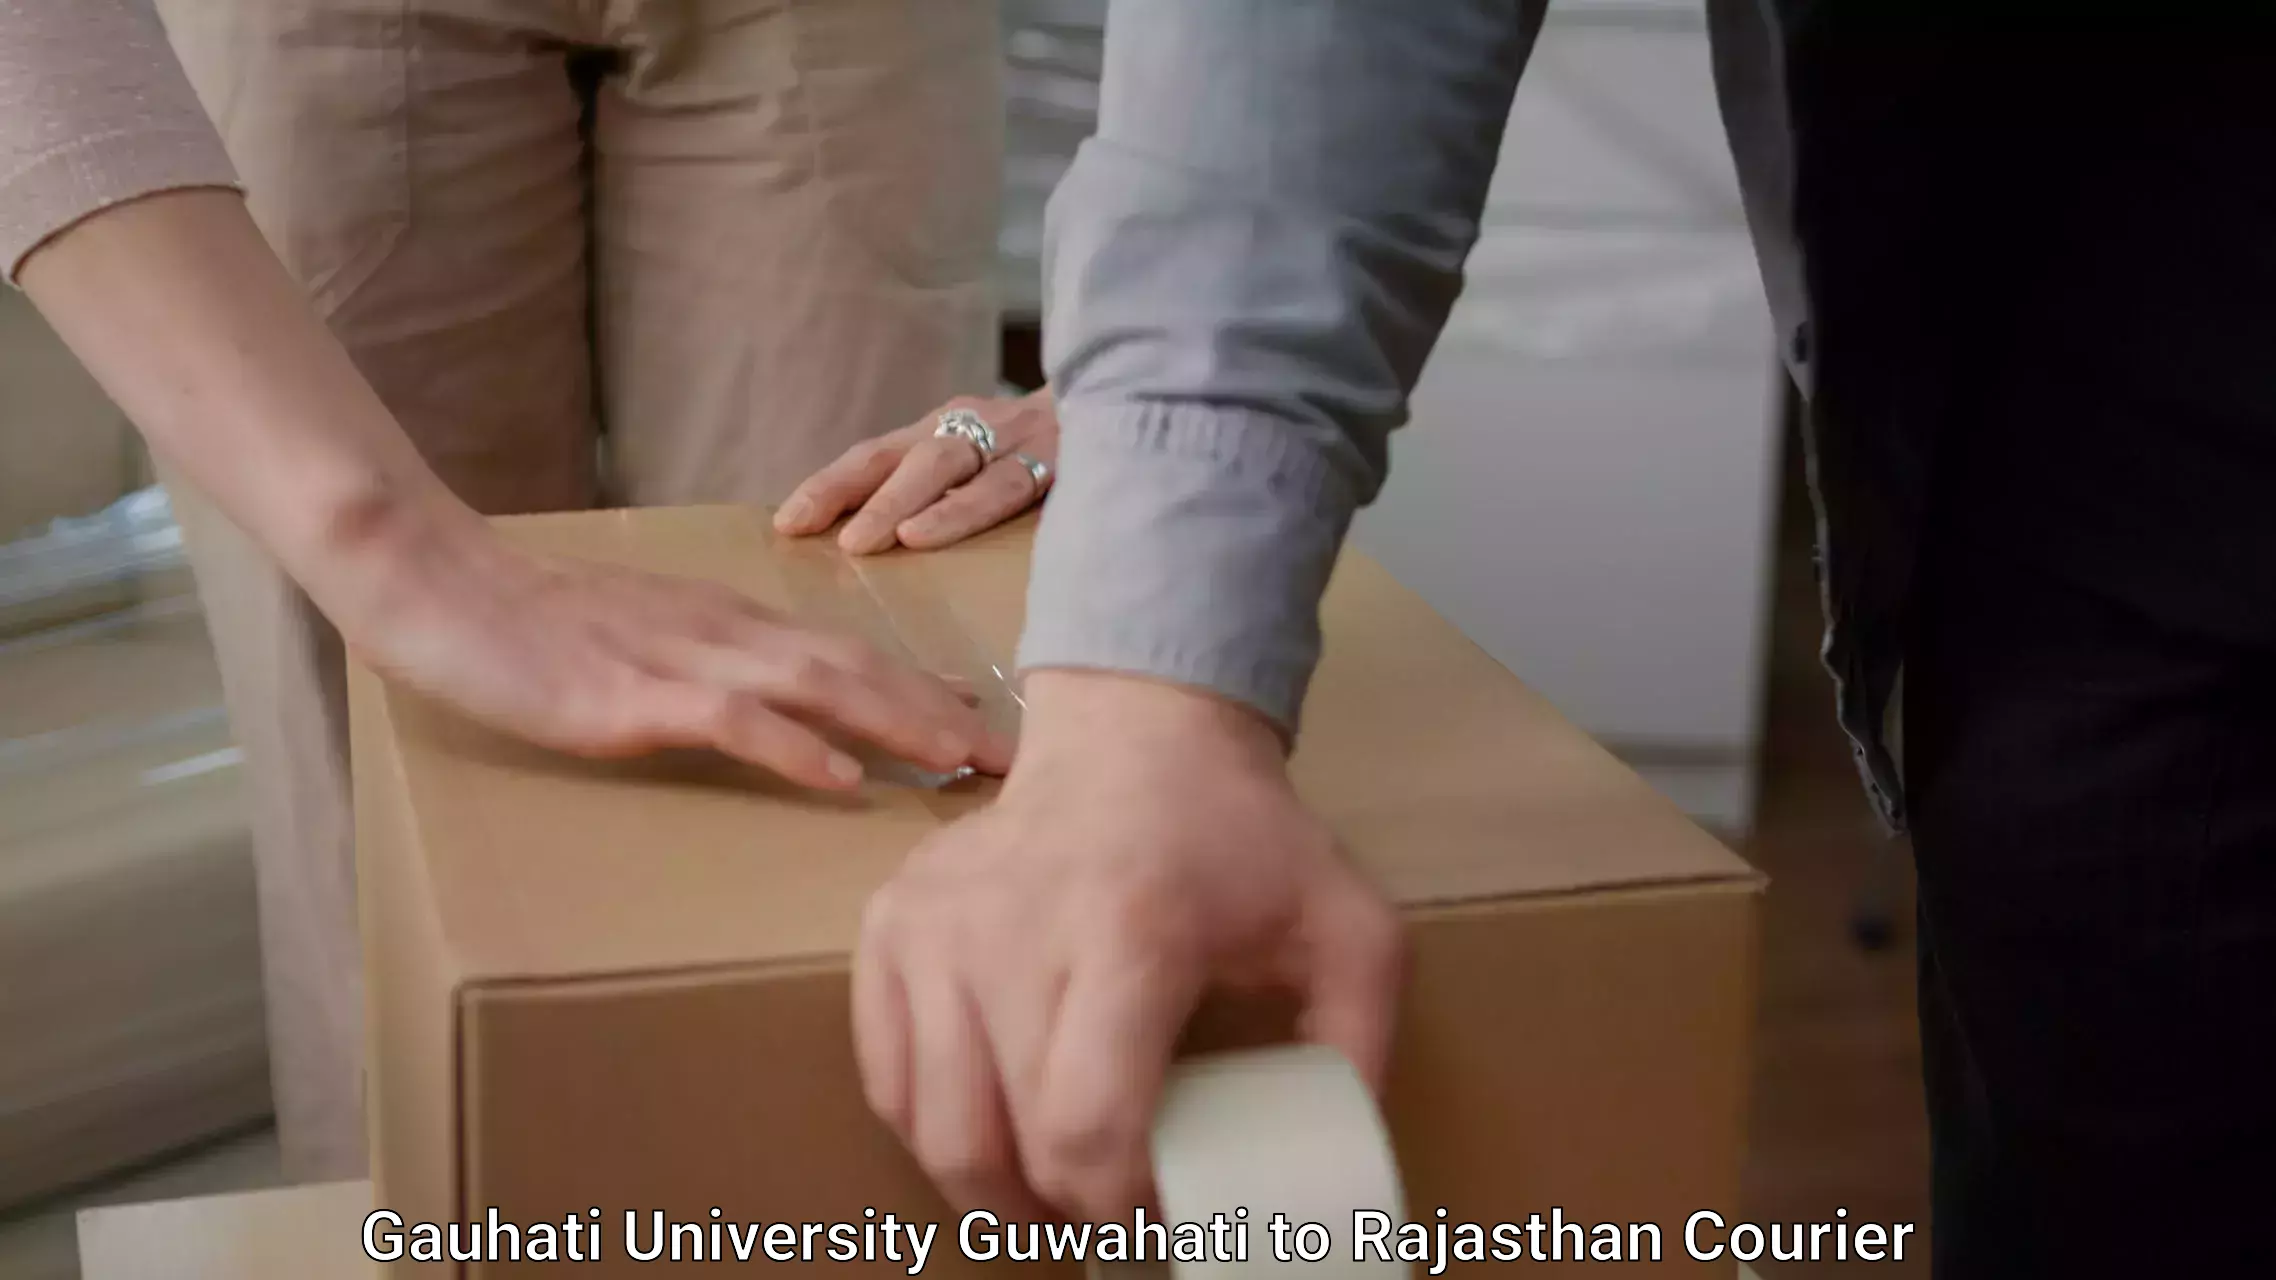 Professional moving company Gauhati University Guwahati to Fatehnagar